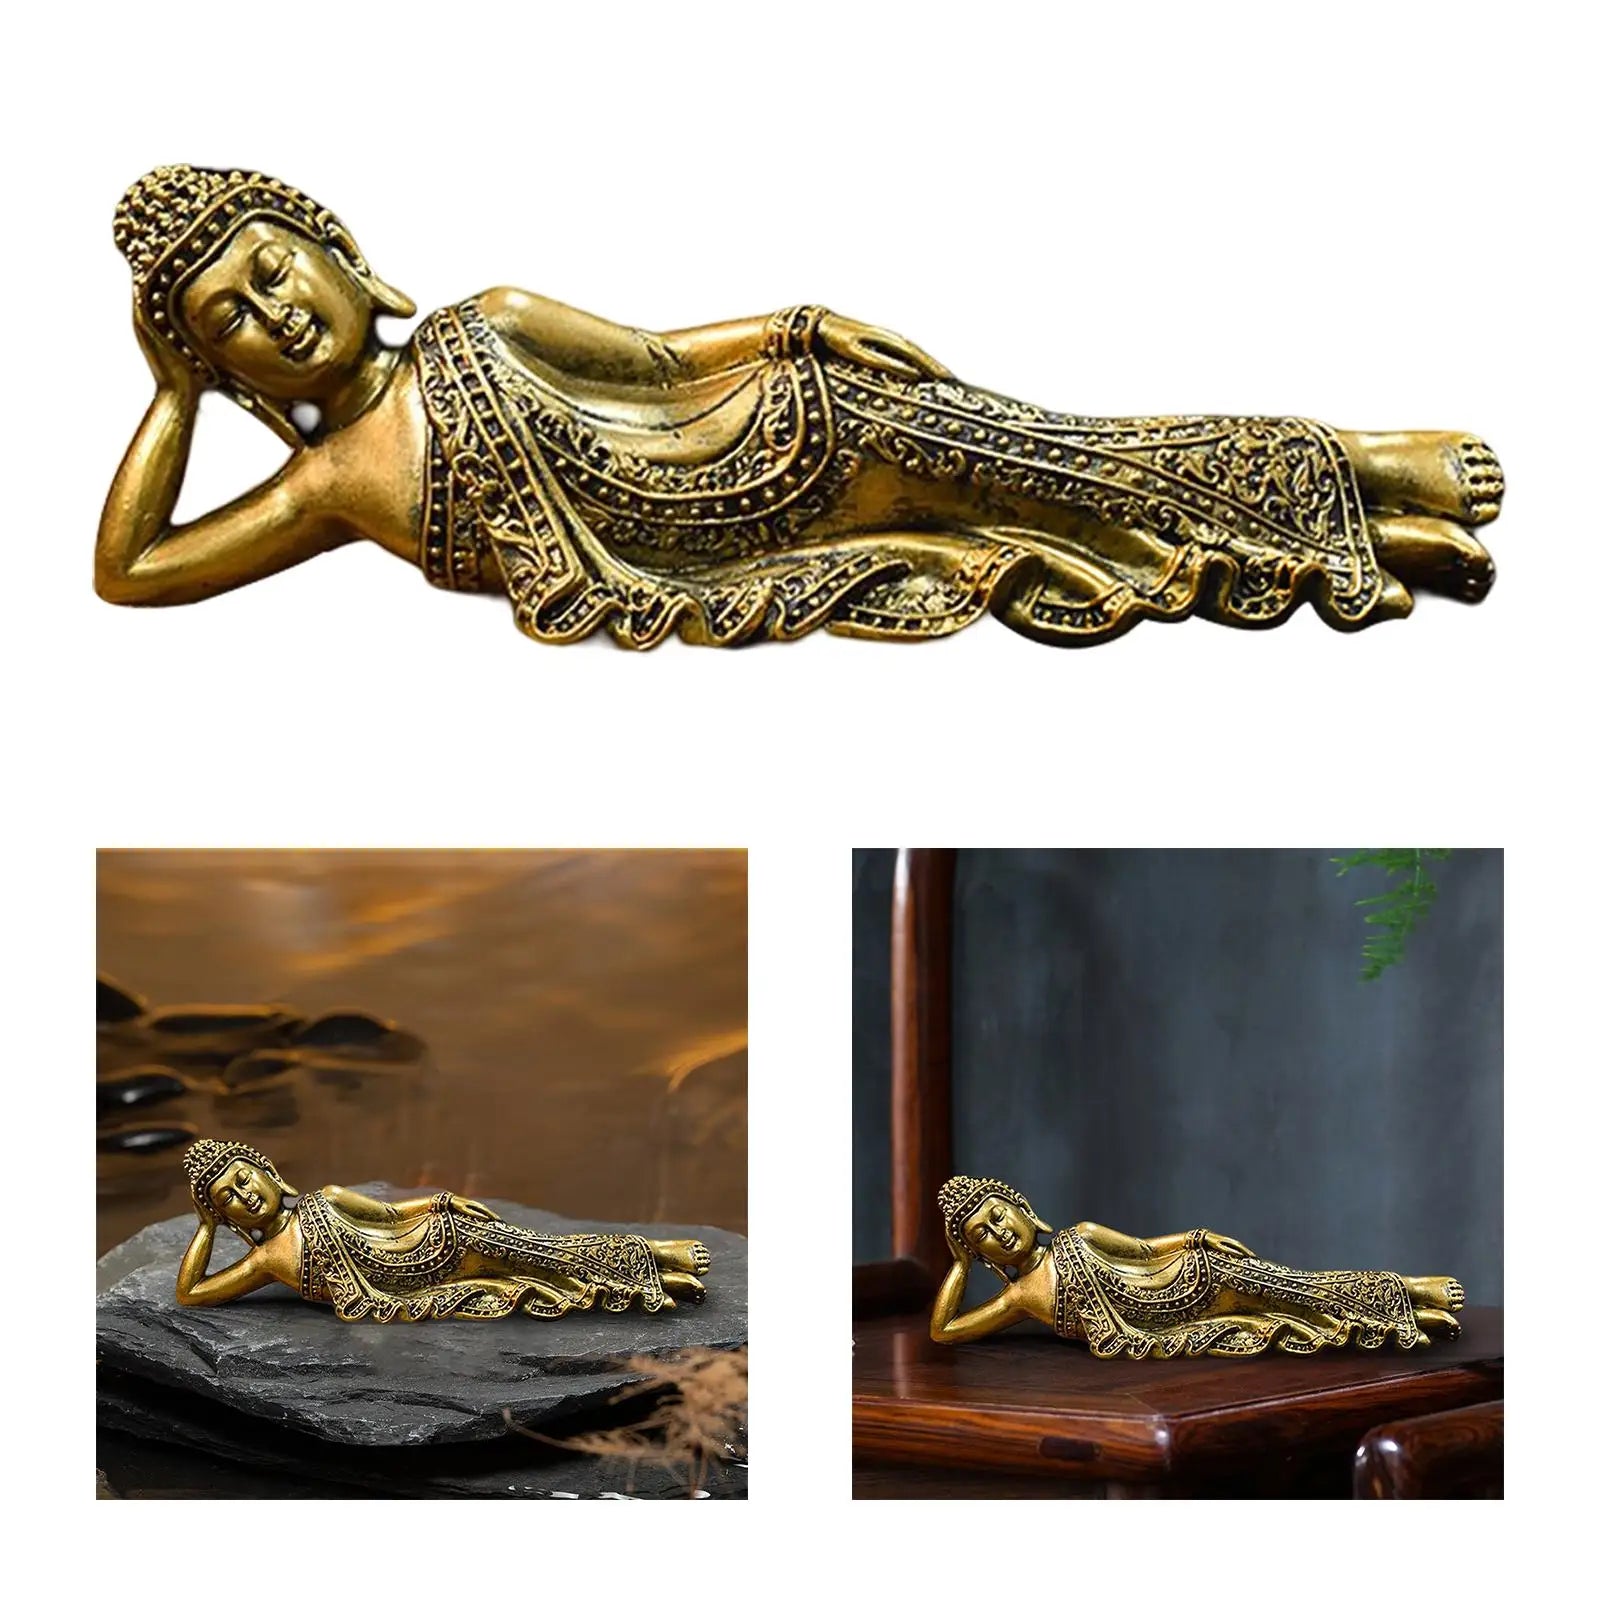 Reclining Buddha statue in resin